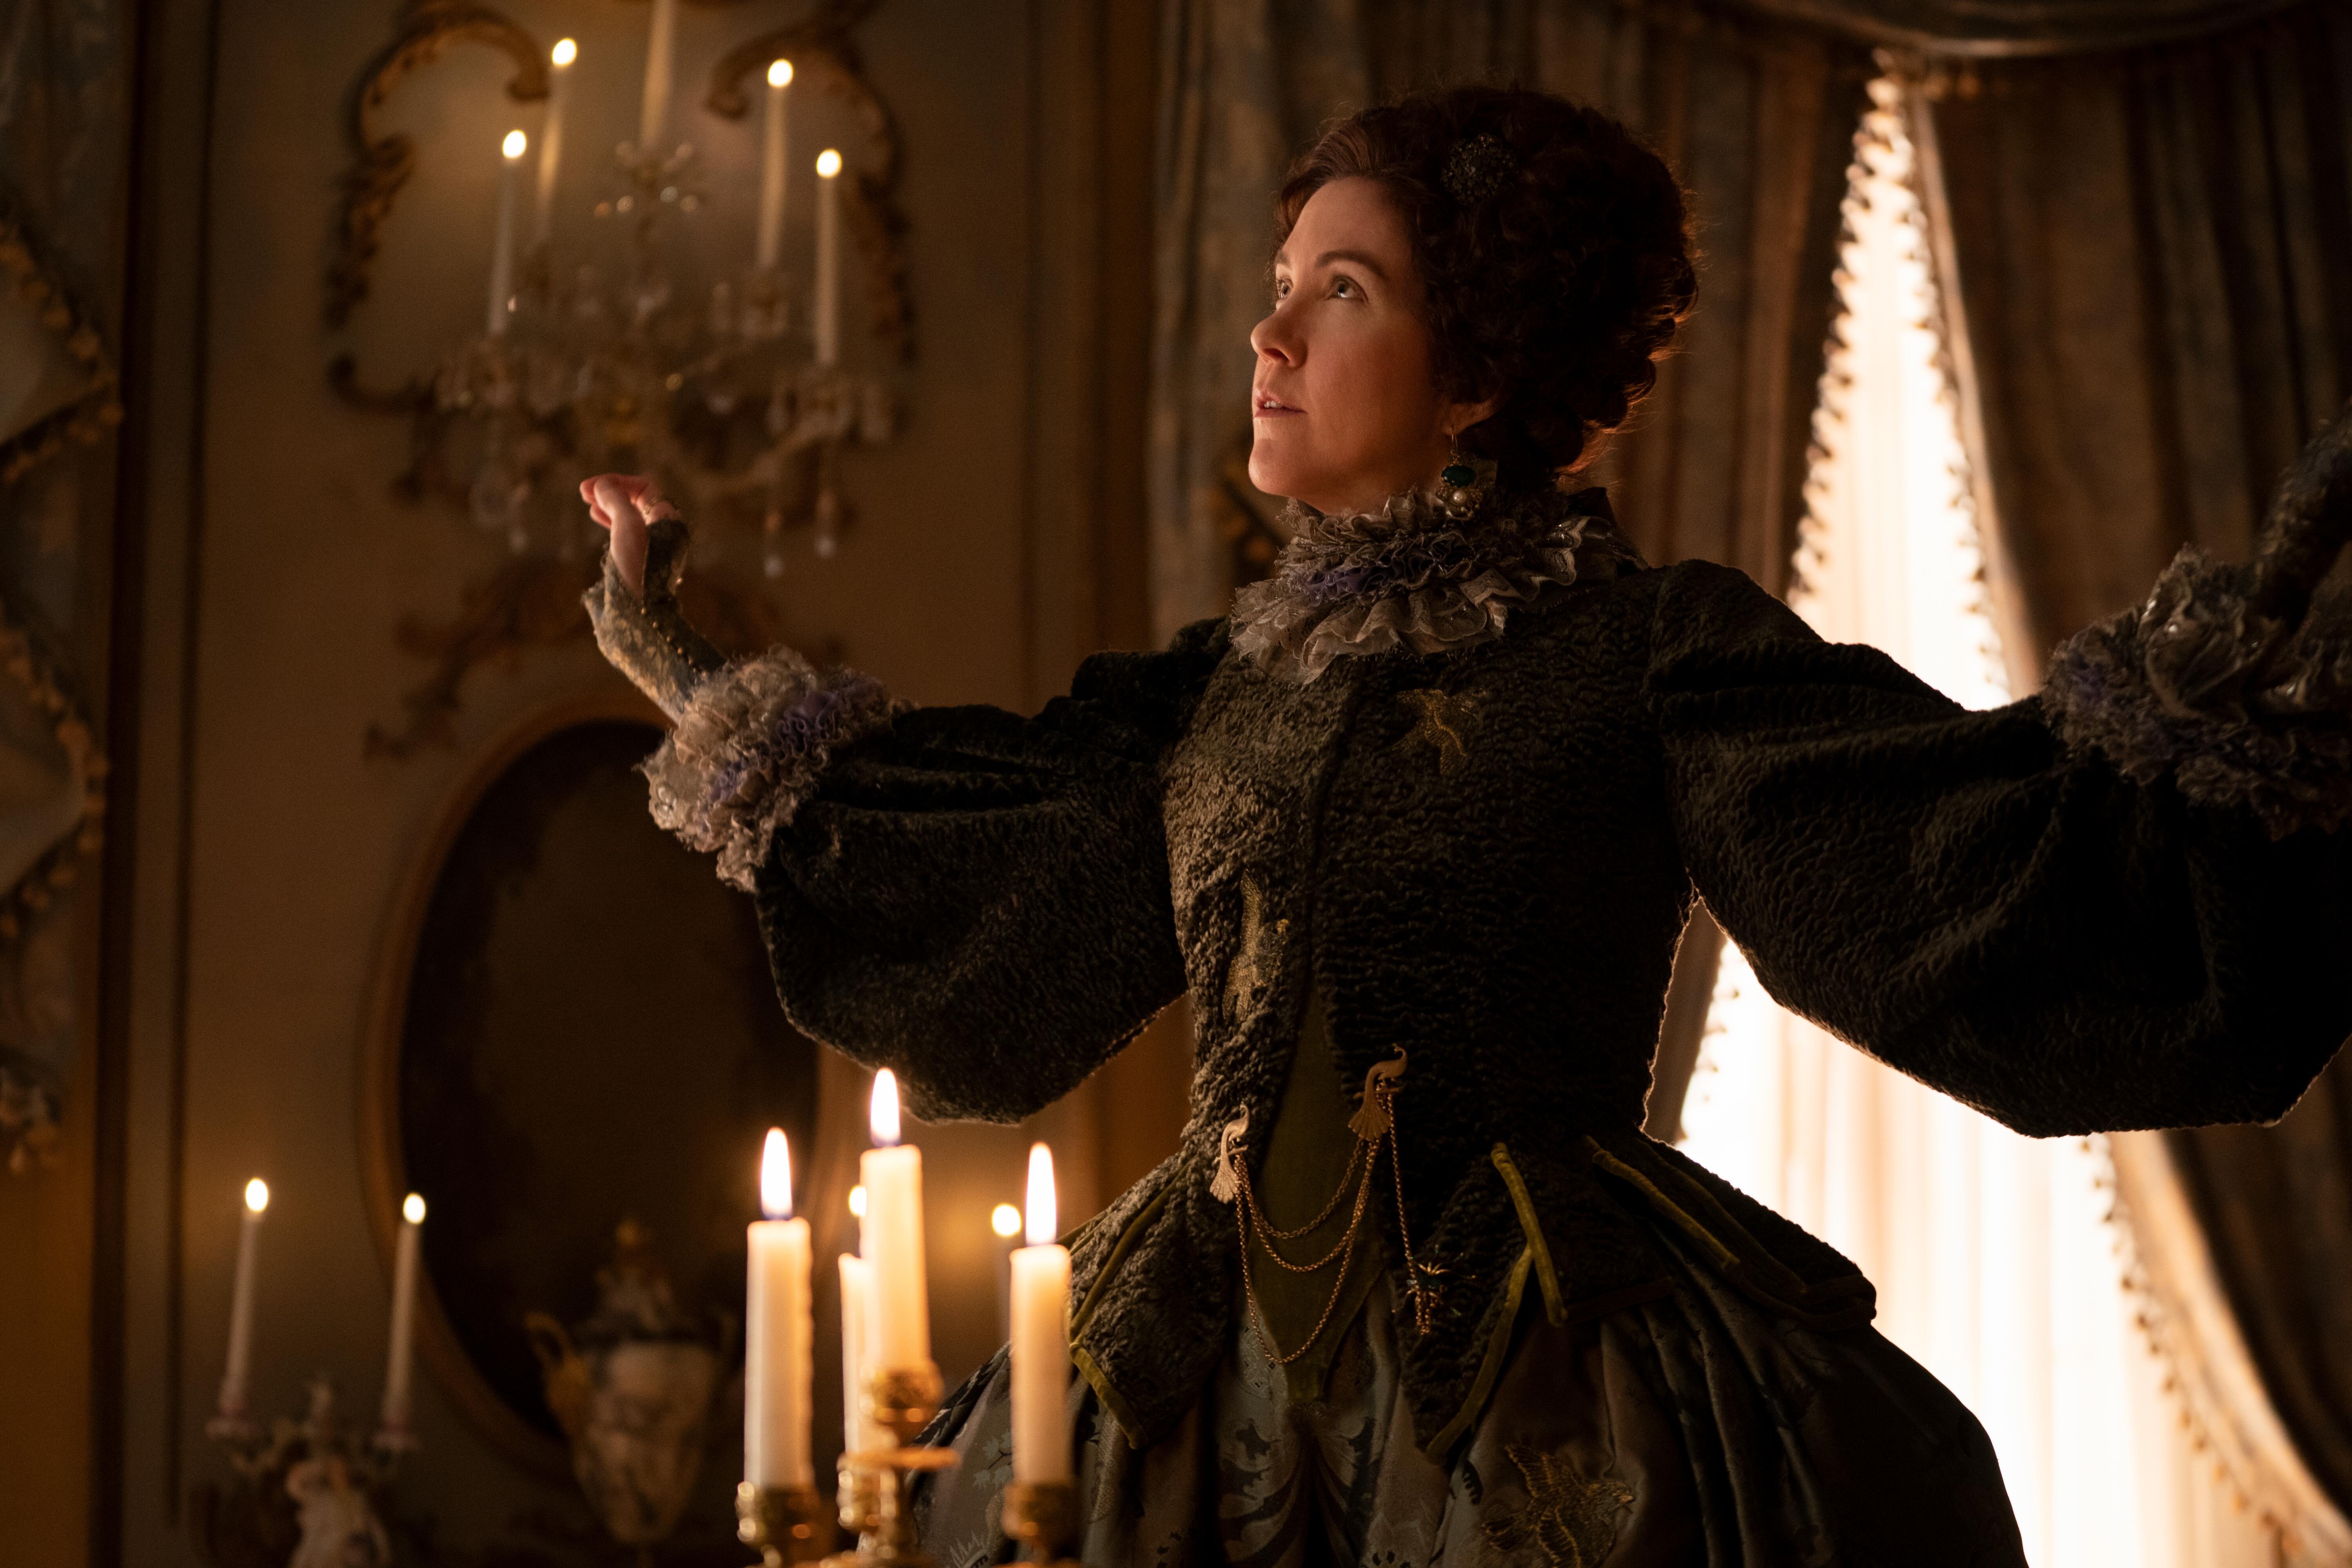 Belinda Bromilow as Aunt Elizabeth with her arms spread in 'The Great' Season 2